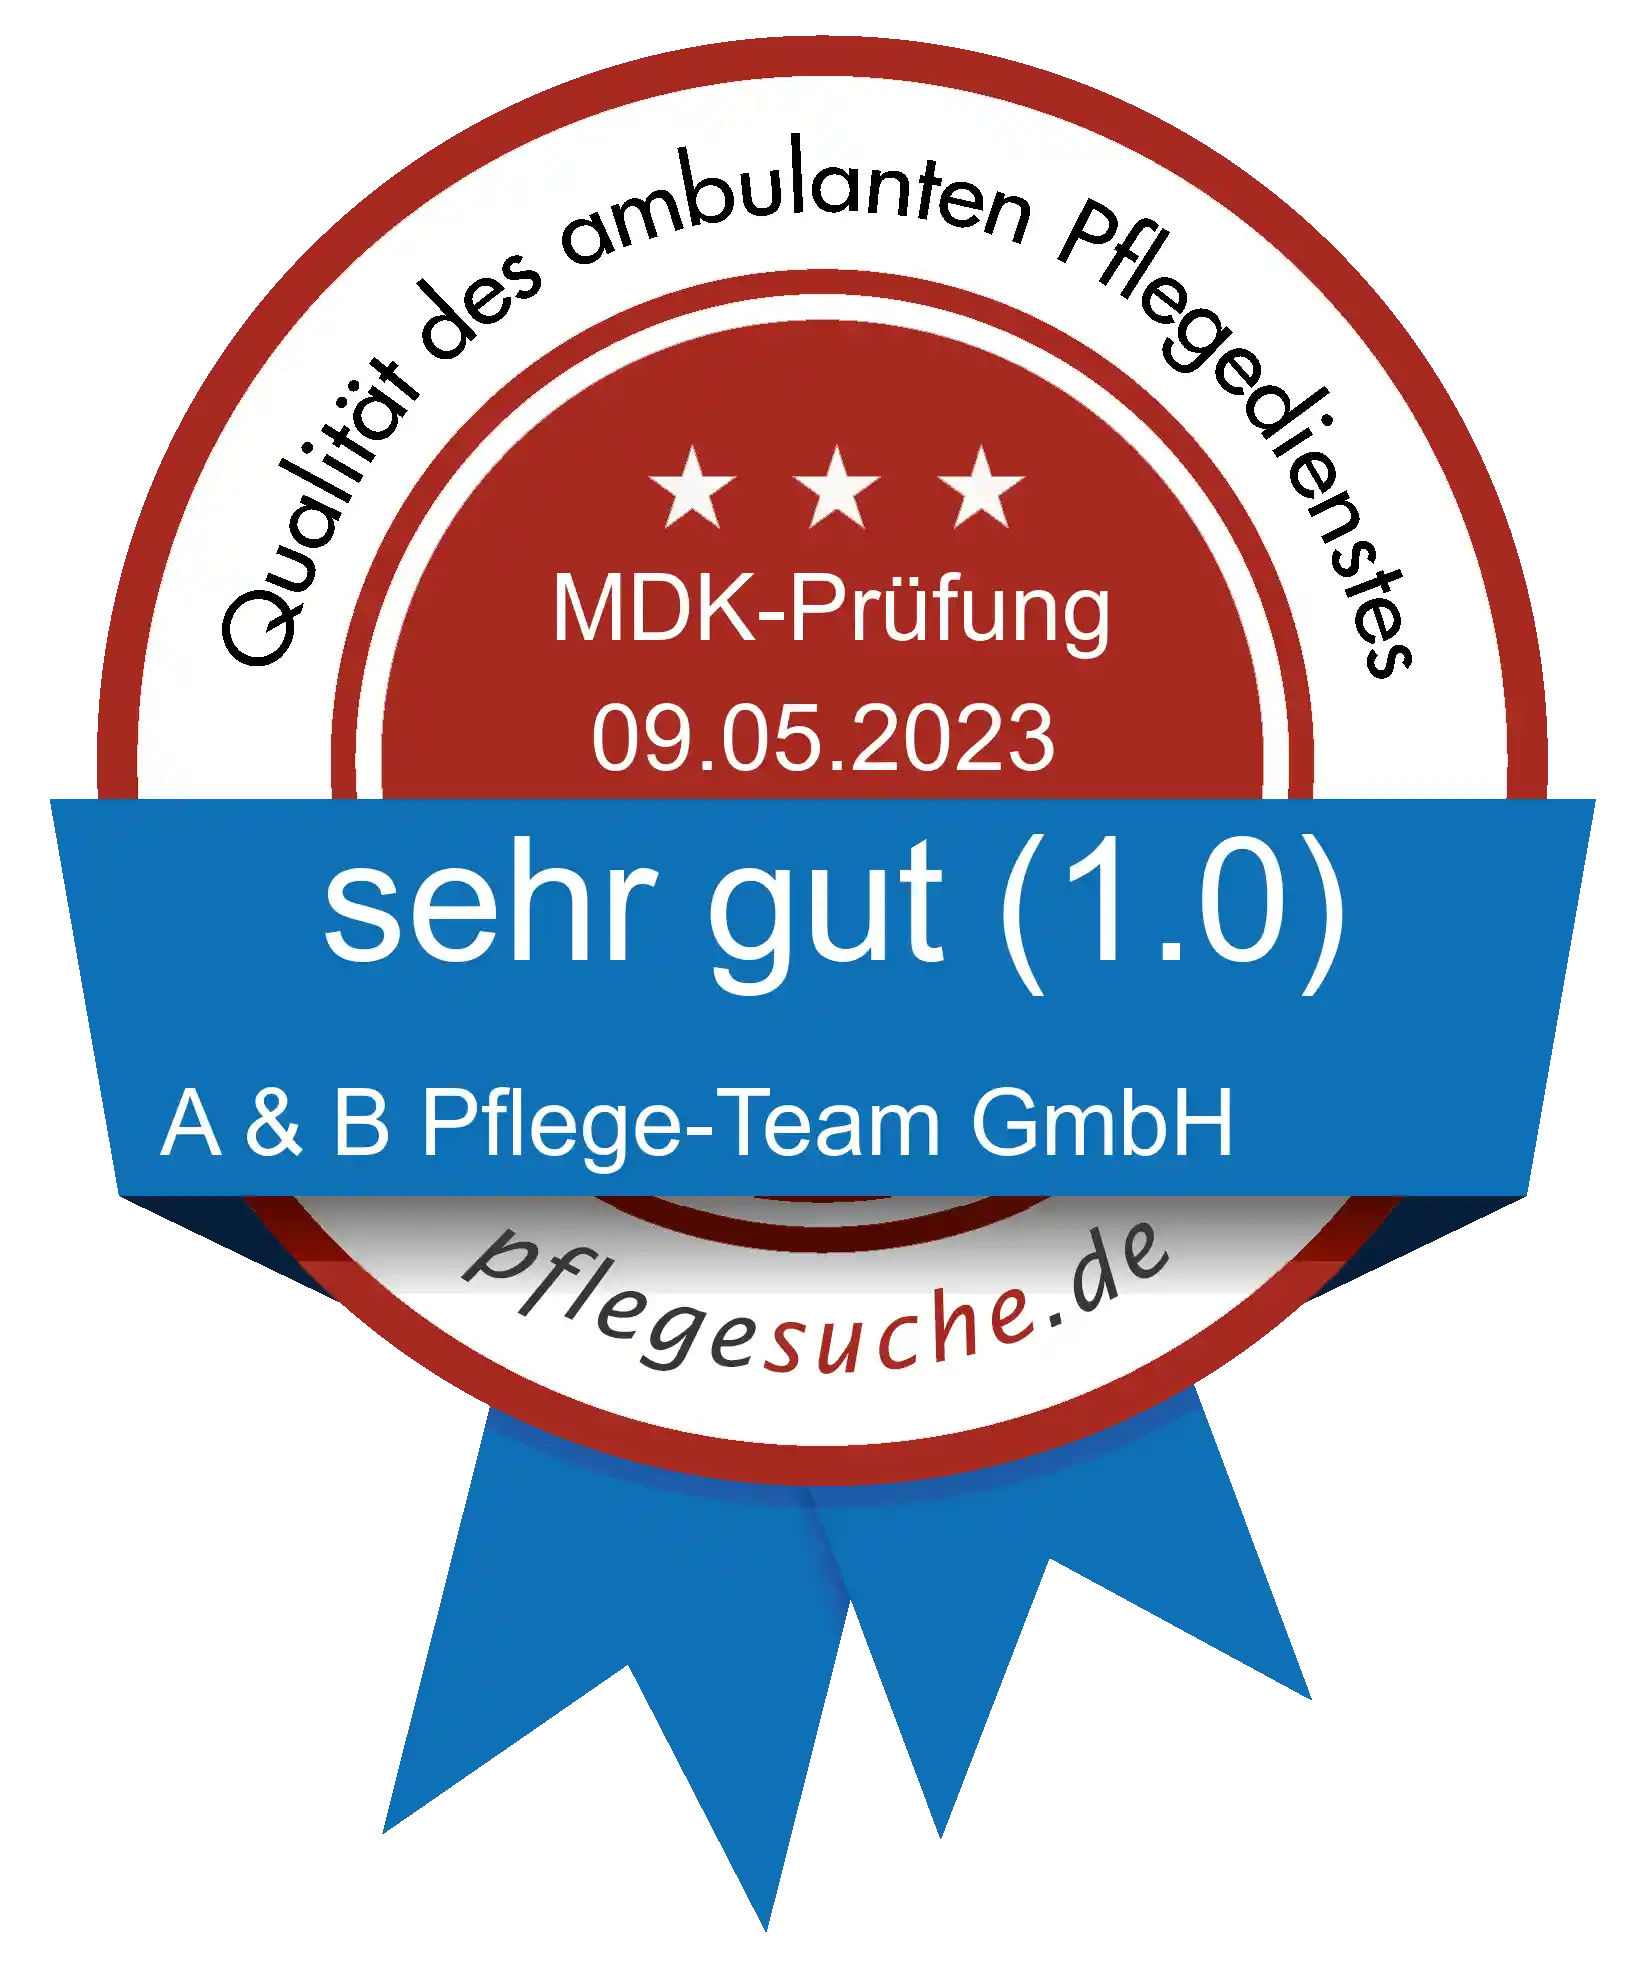 Siegel Benotung: A & B Pflege-Team GmbH